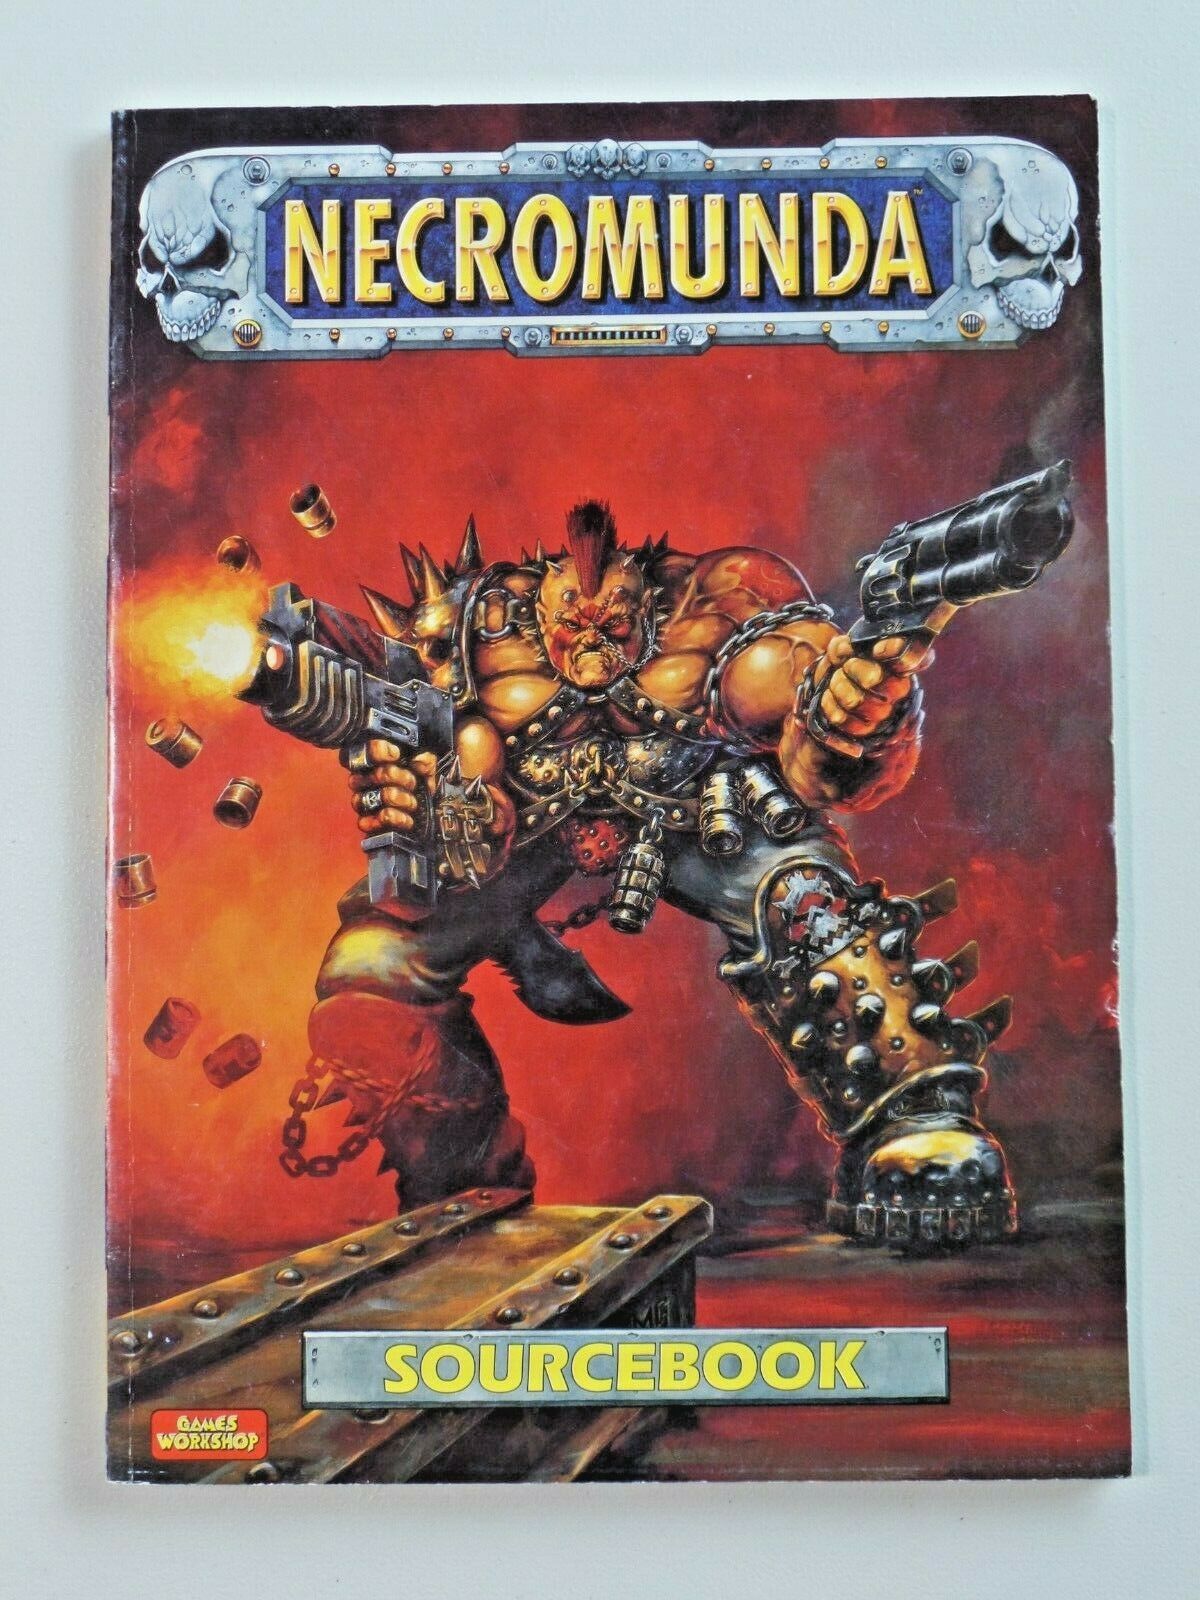 Games Workshop Necromunda Sourcebook Rpg Book 1995 7535